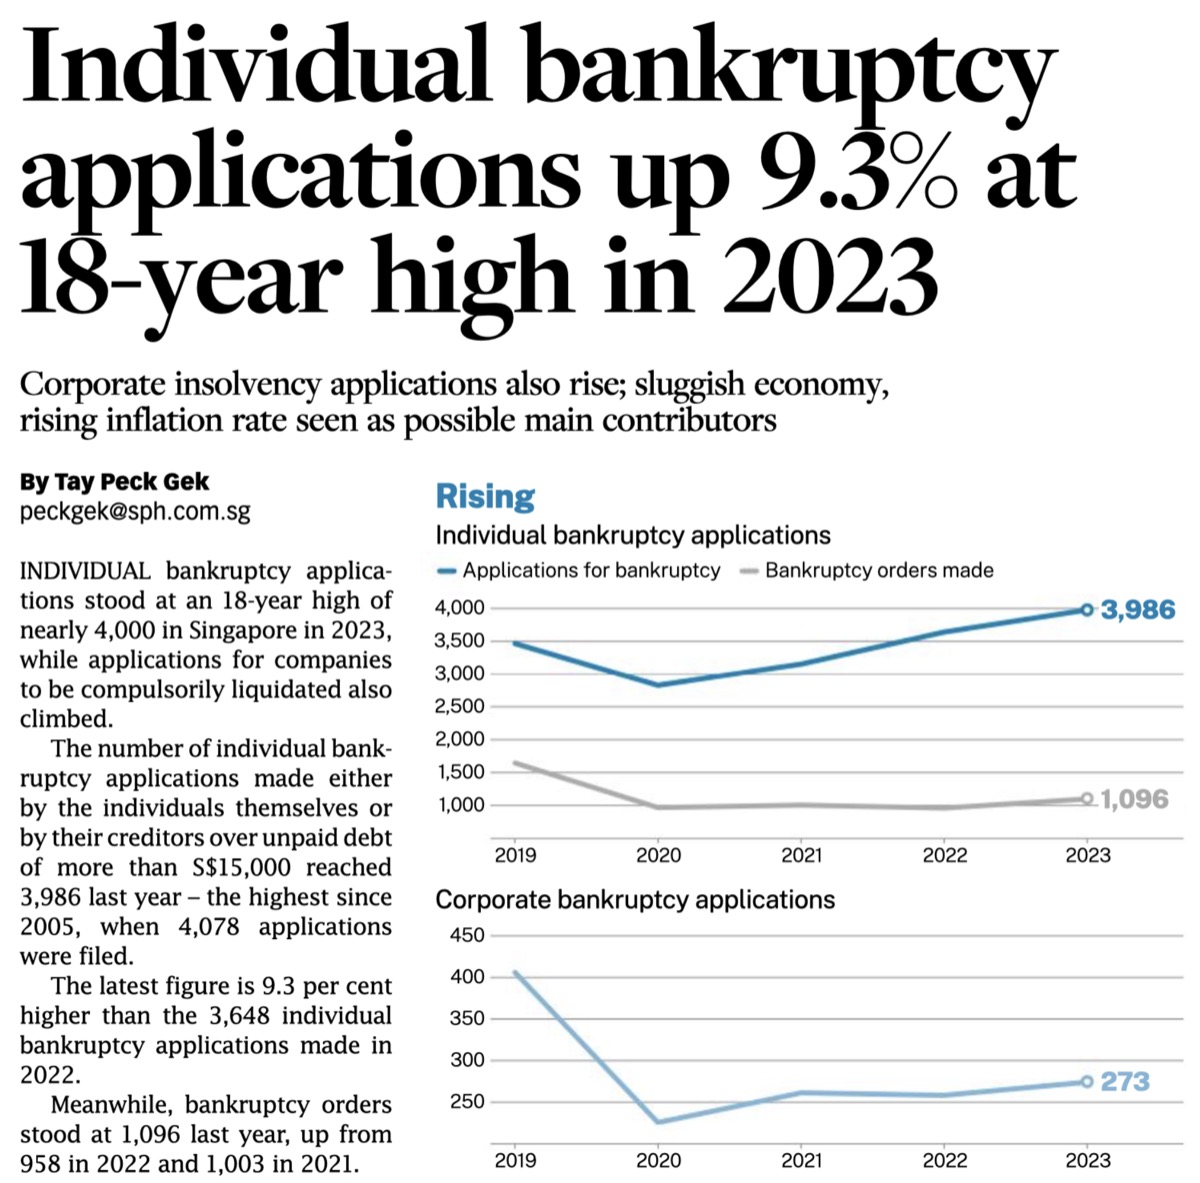 /img/Individual bankruptcy applications up 9.3 at 18-year high in 2023-1.jpg